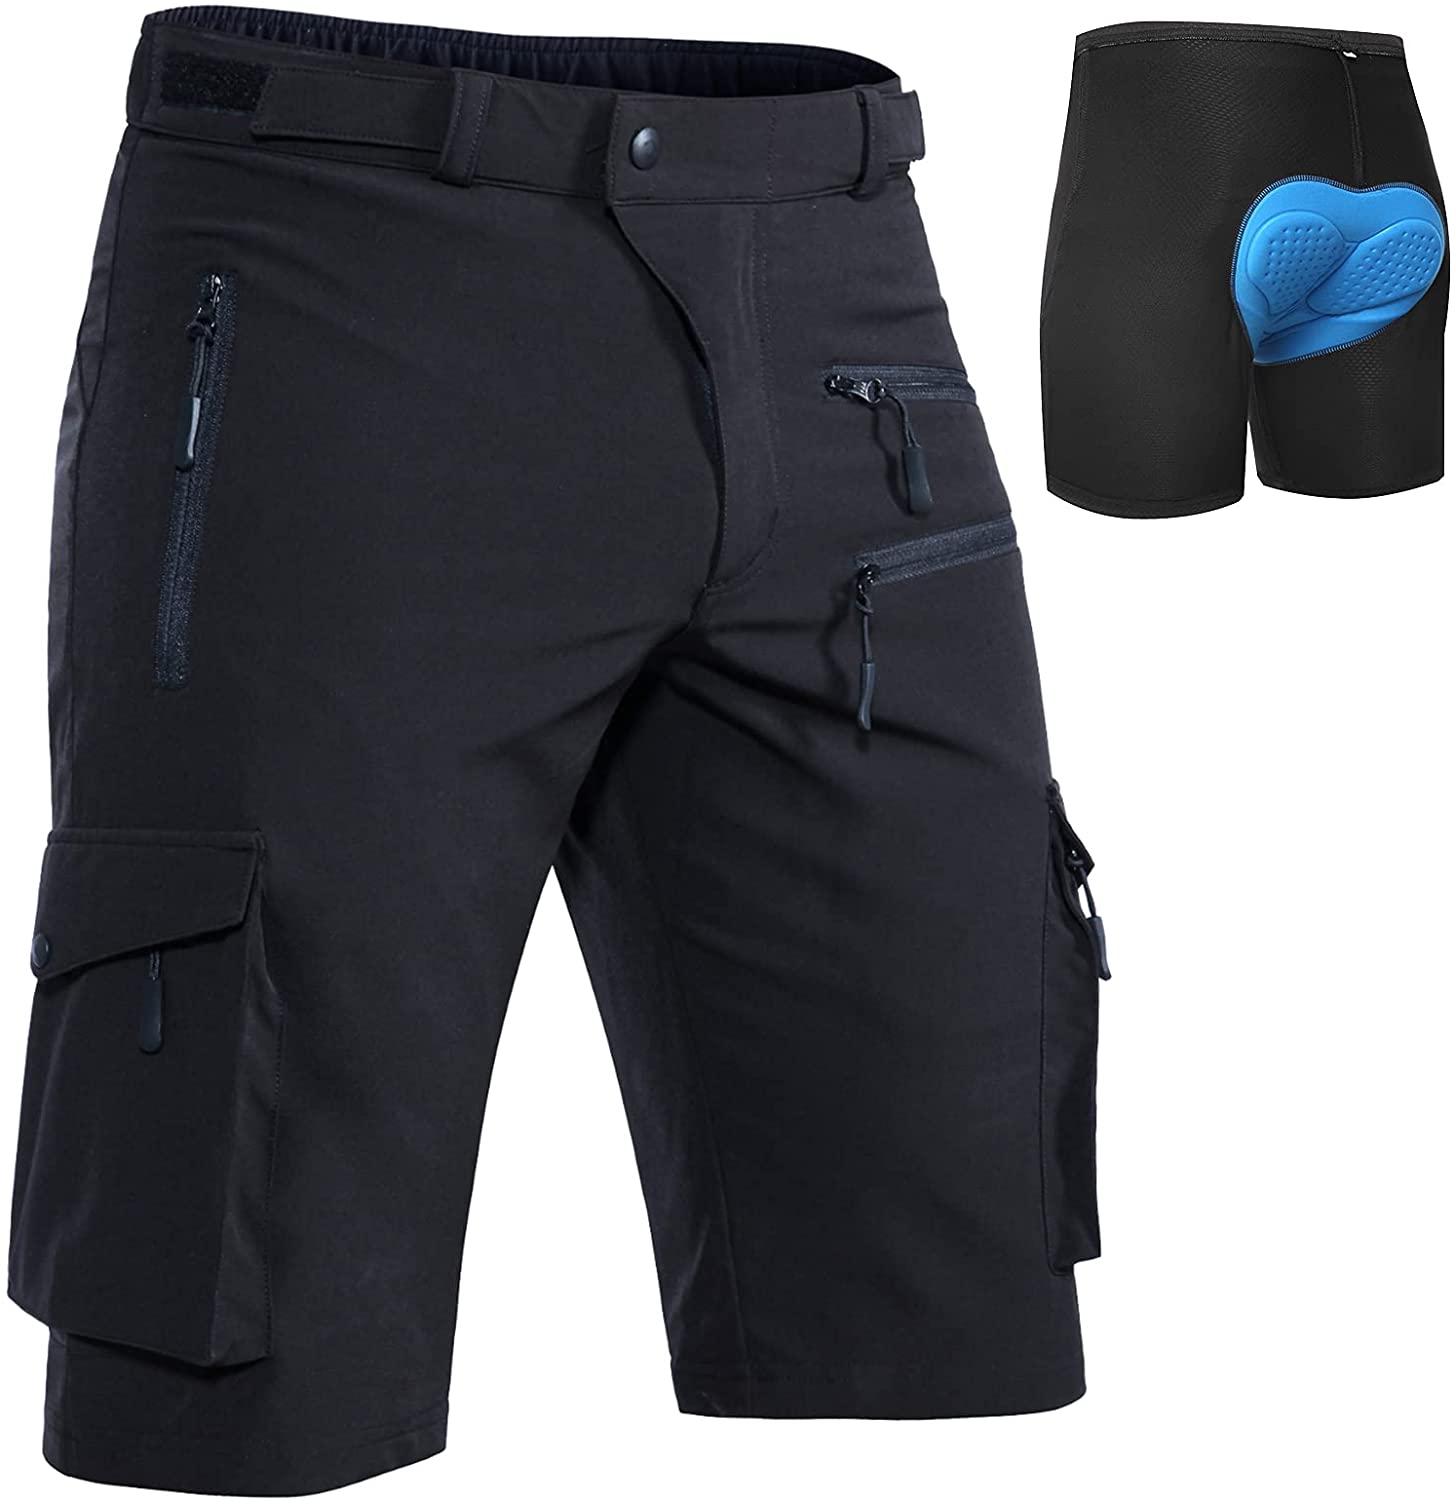 Hiauspor Men's Mountain Bike Shorts Stretch MTB Shorts Quick Dry with